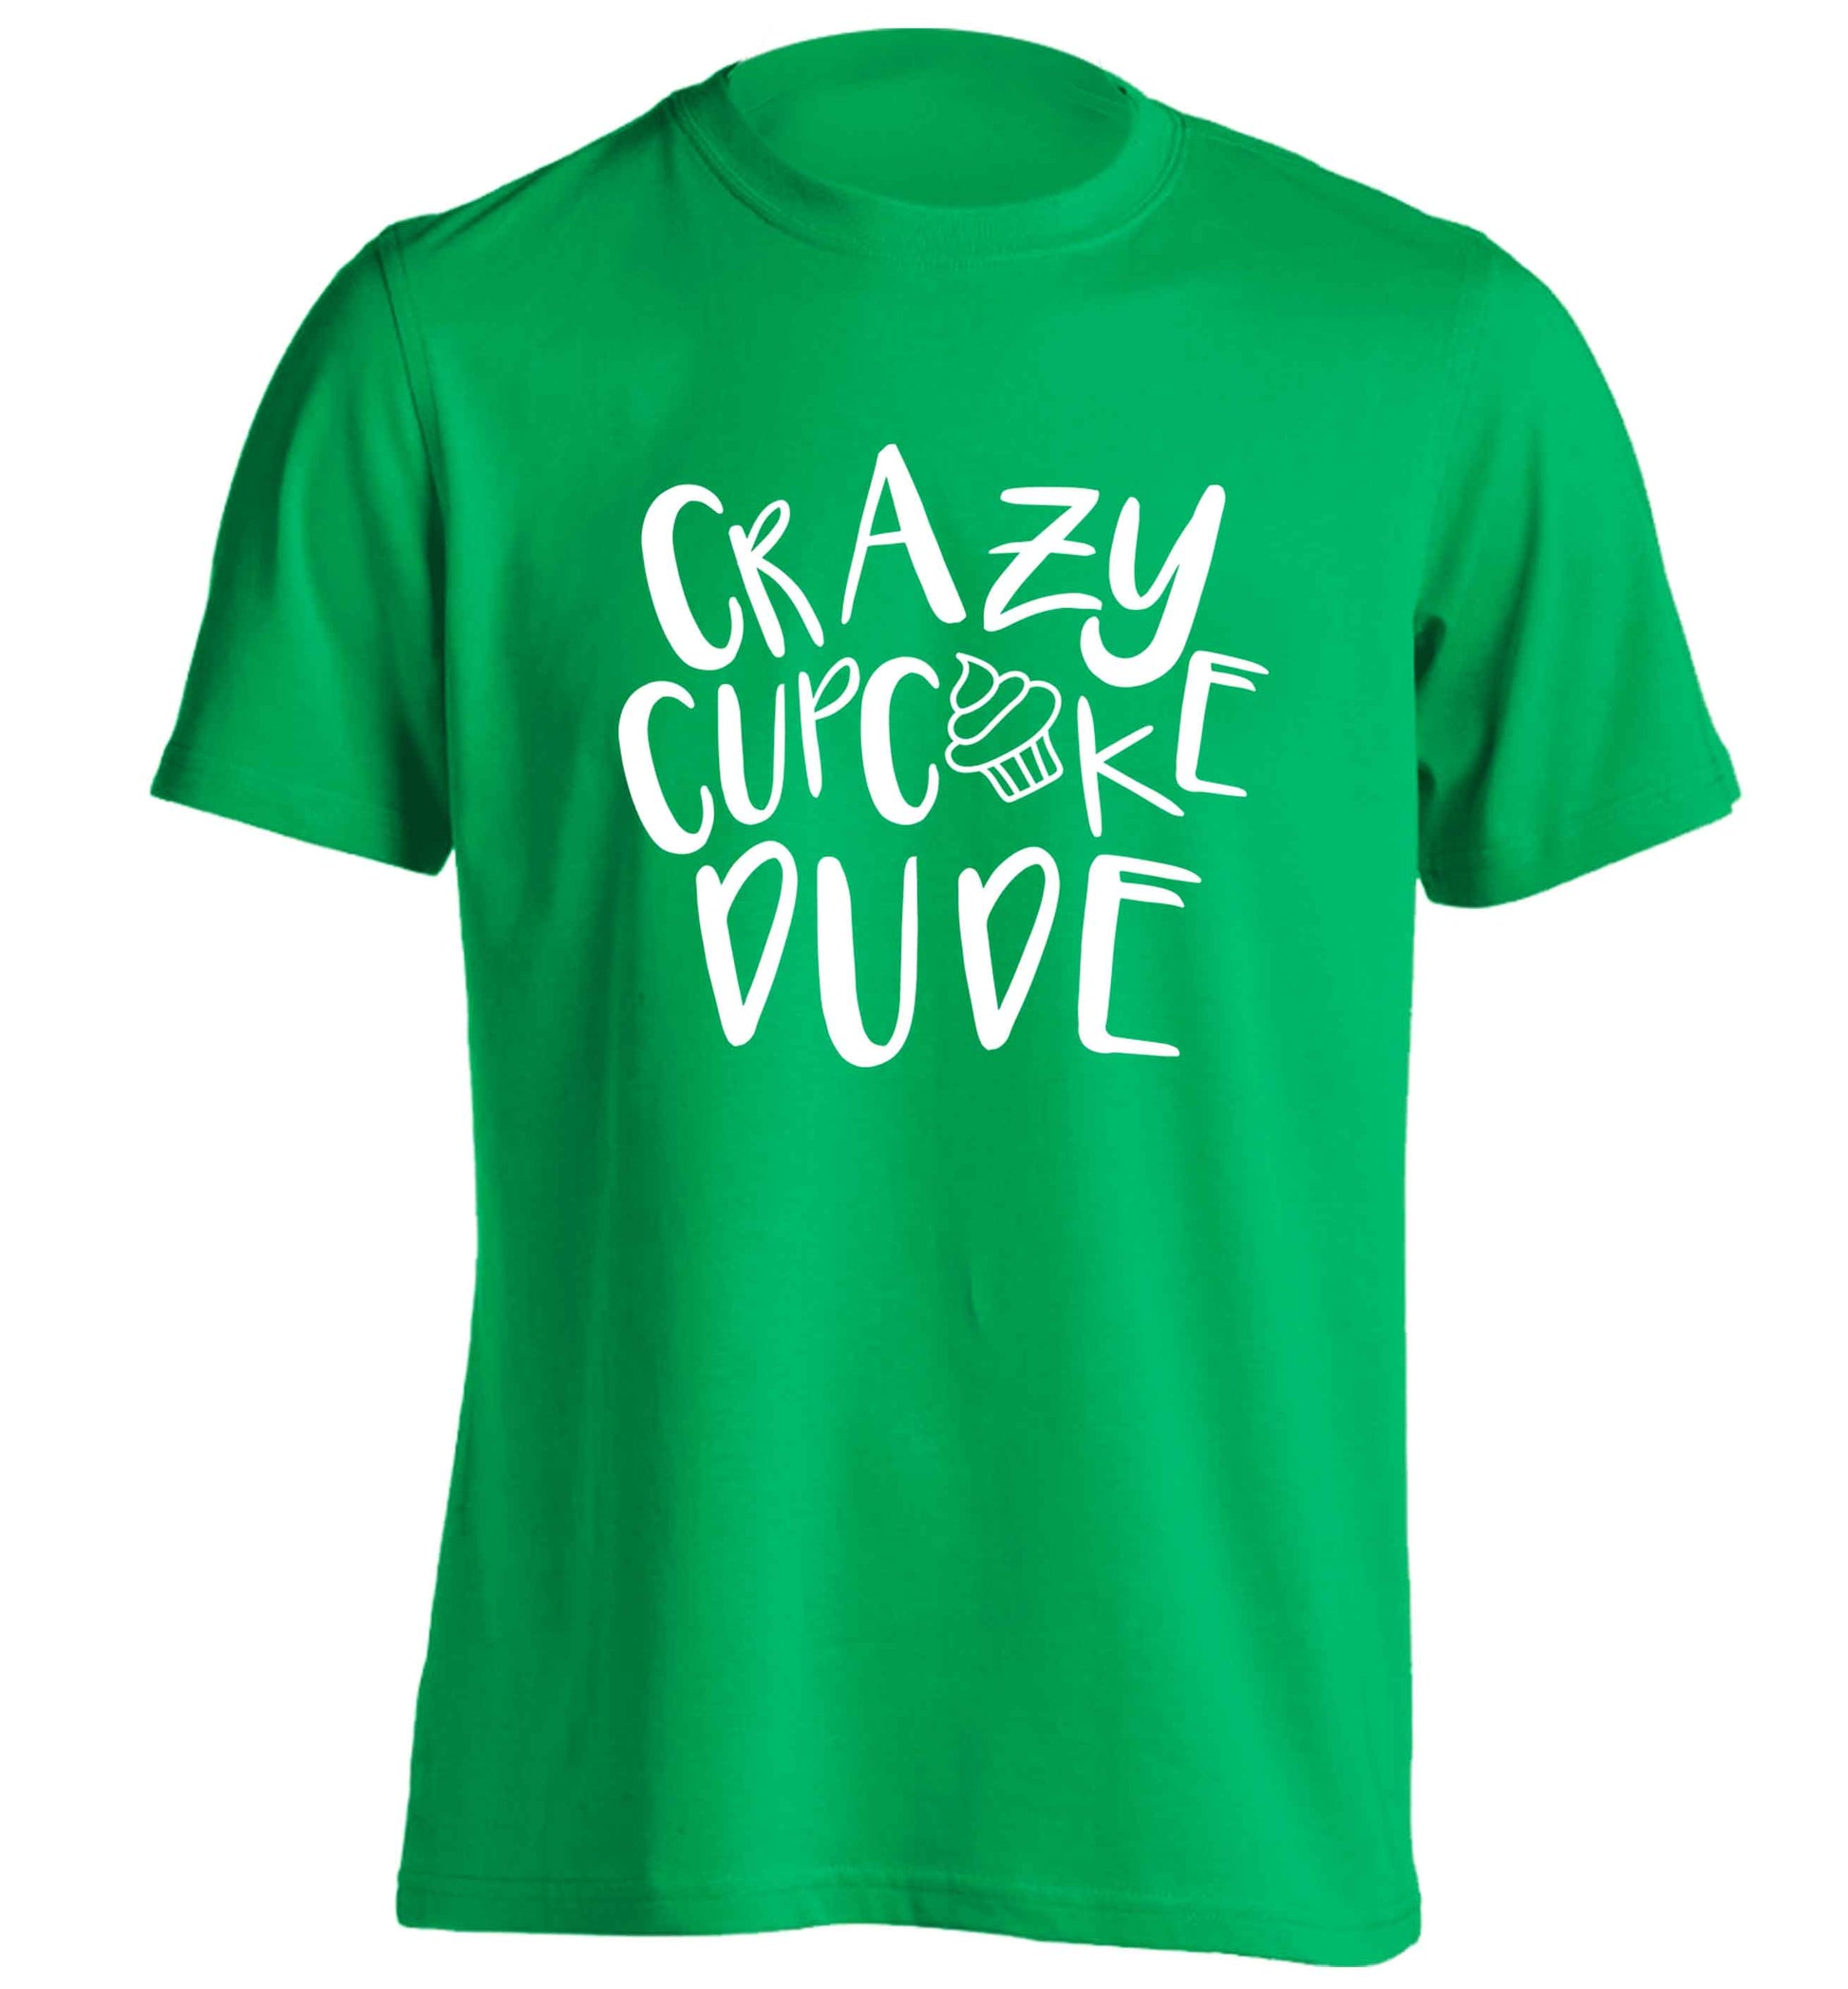 Crazy cupcake dude adults unisex green Tshirt 2XL